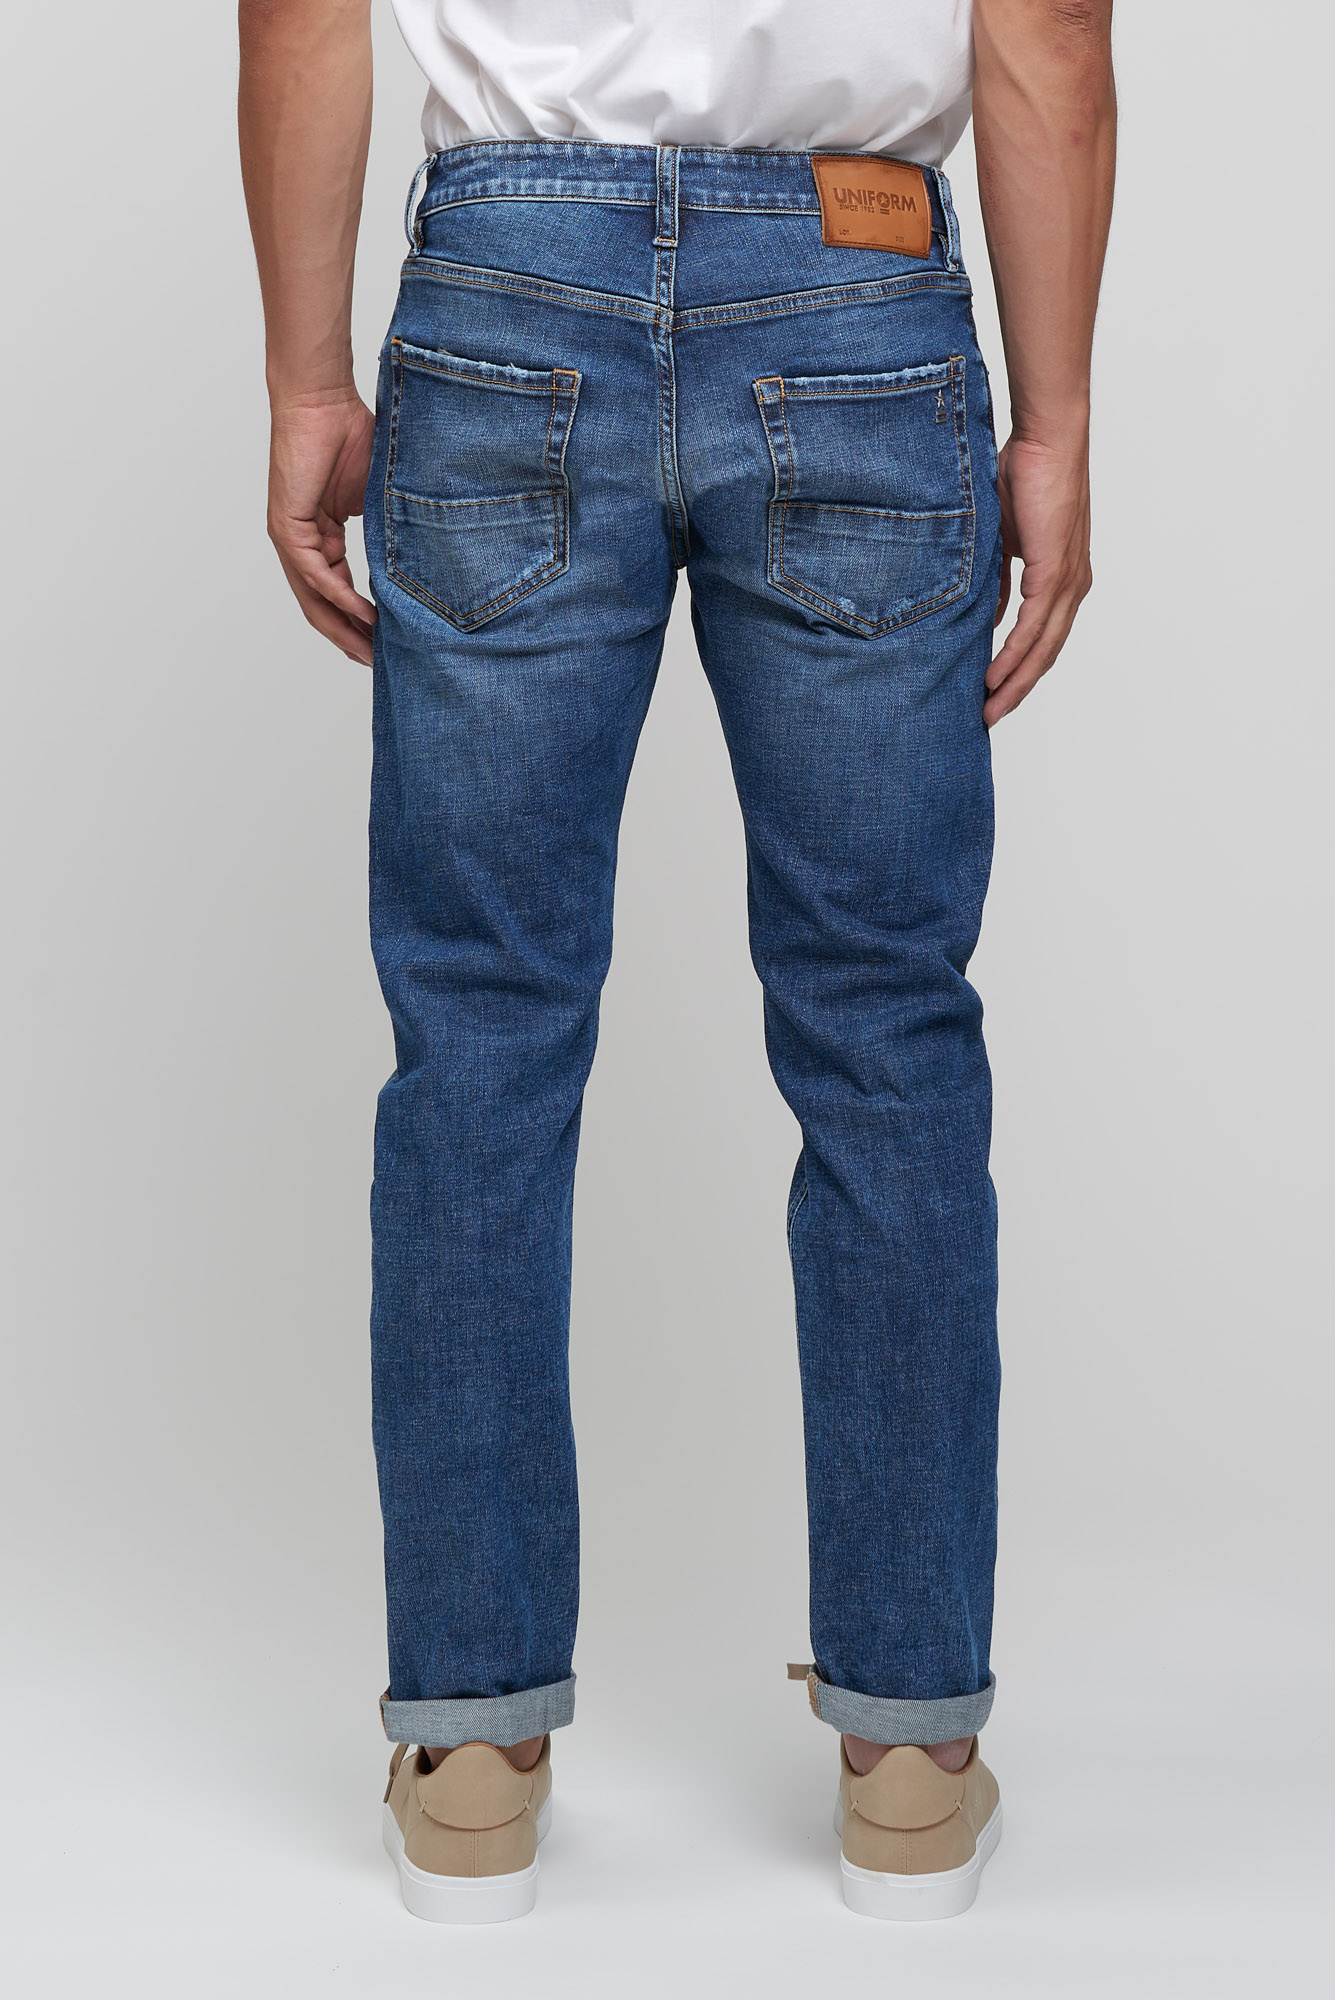 BARNEY REGULAR SLIM S1 - Uniform Jeans Official